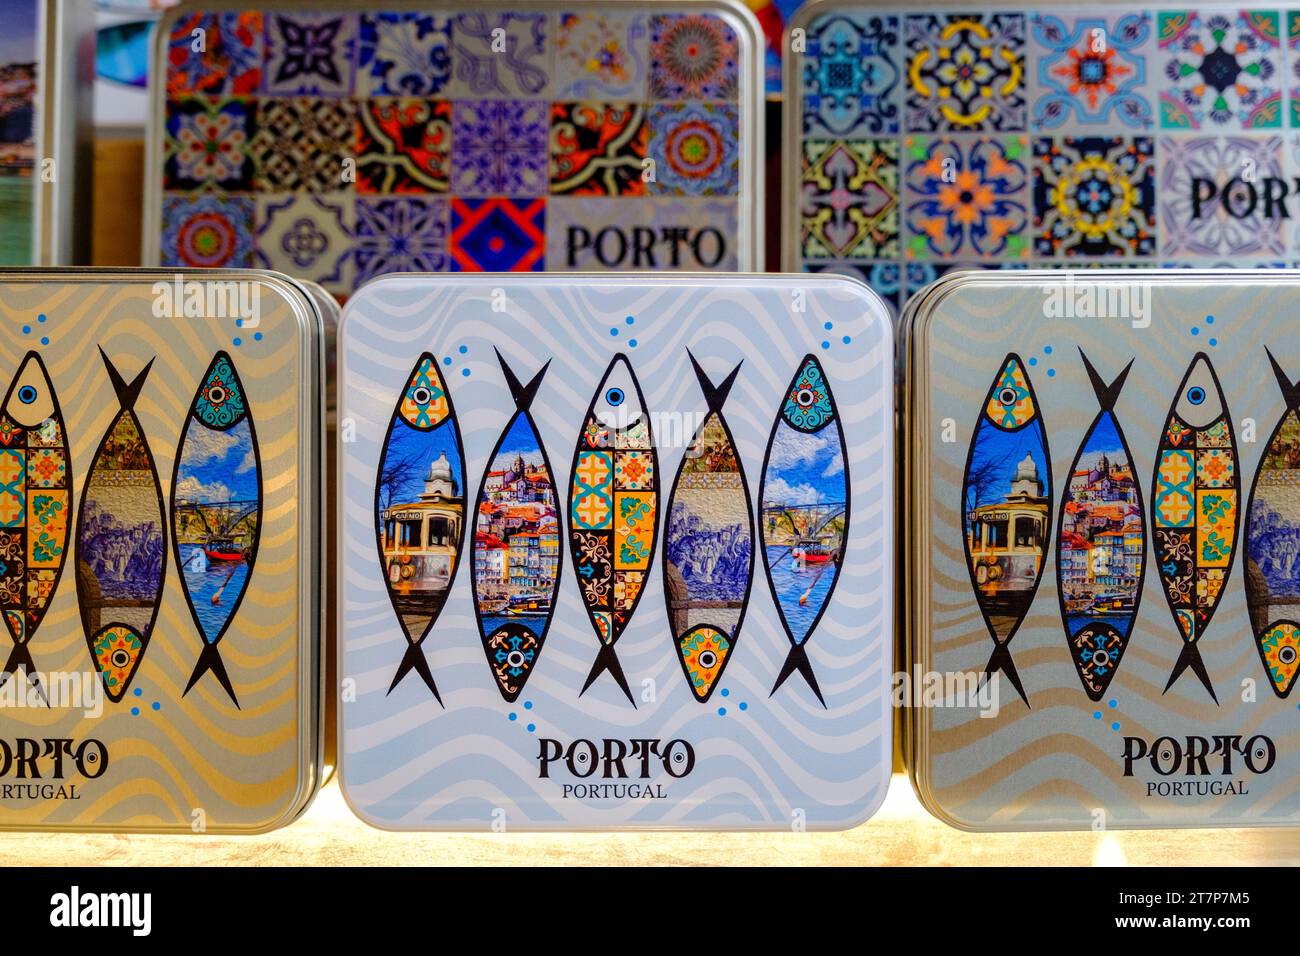 Fancy gift cans, Portuguese sardine illustrations, keepsakes, Bolhao Market, Porto, Portugal Stock Photo